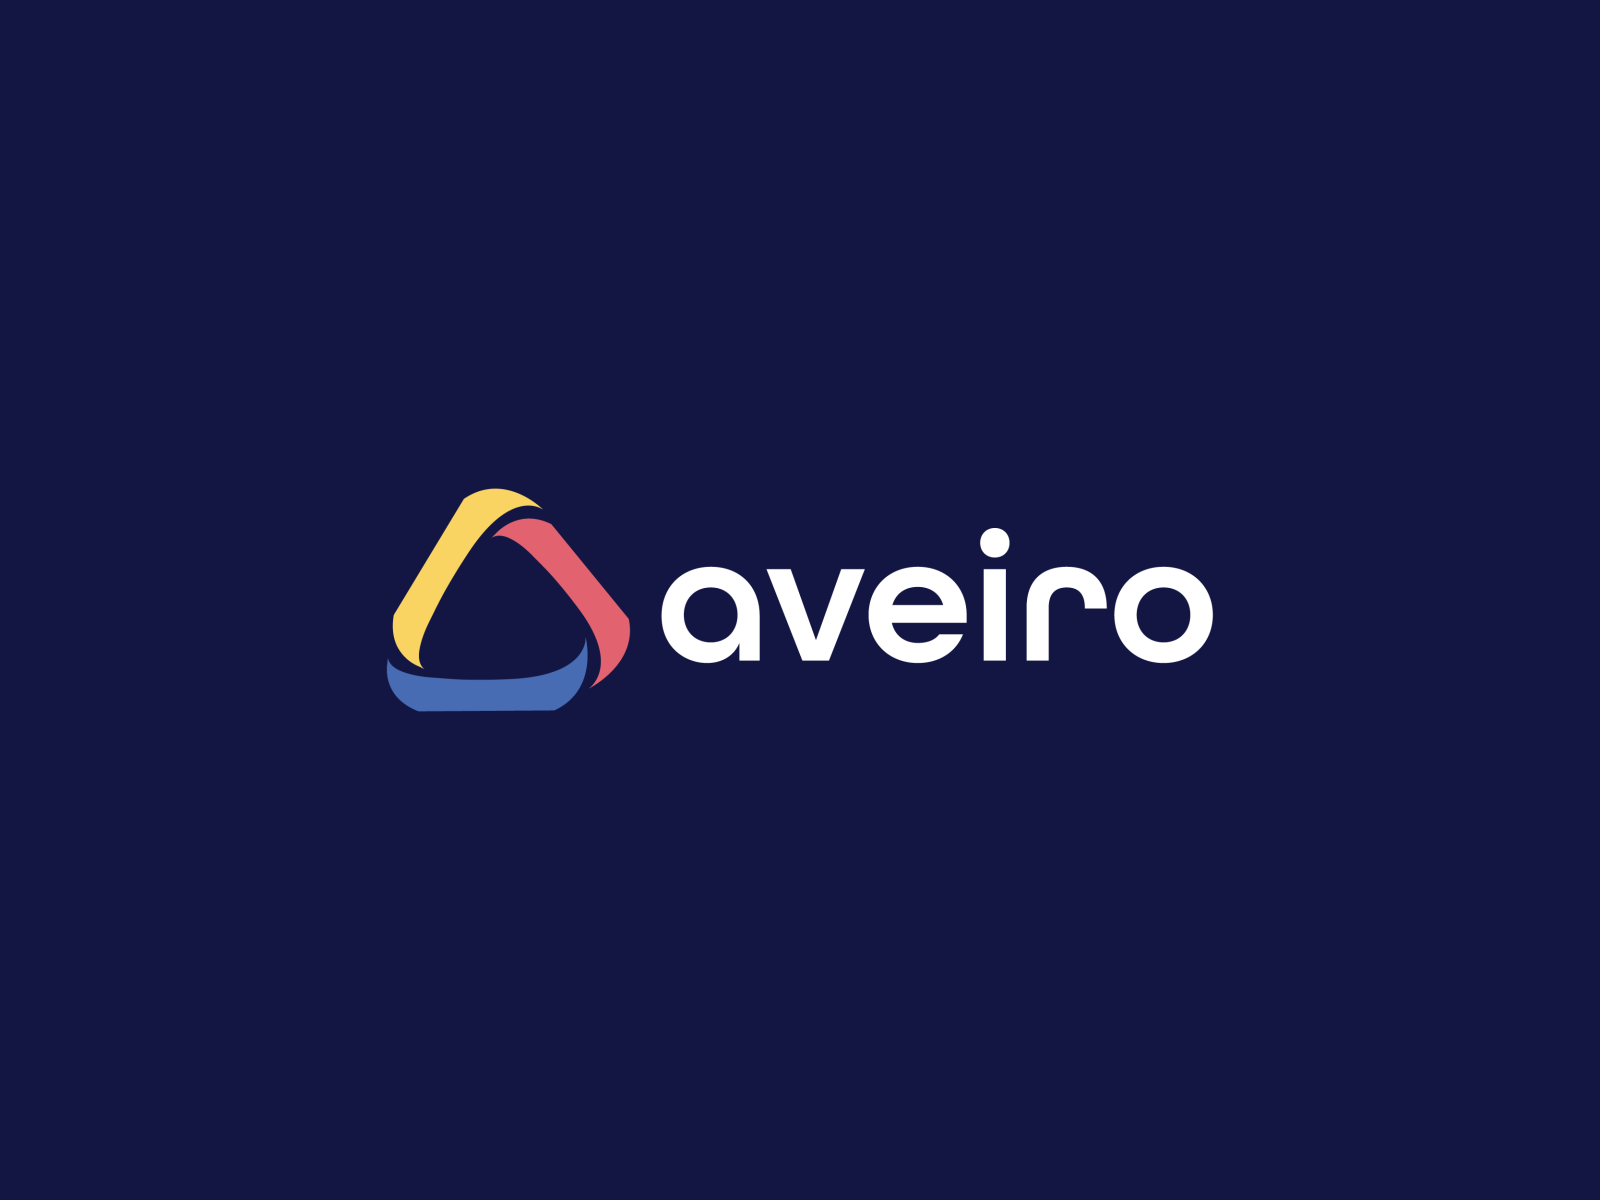 aveiro Logo Design by Riyad Sbeitan on Dribbble